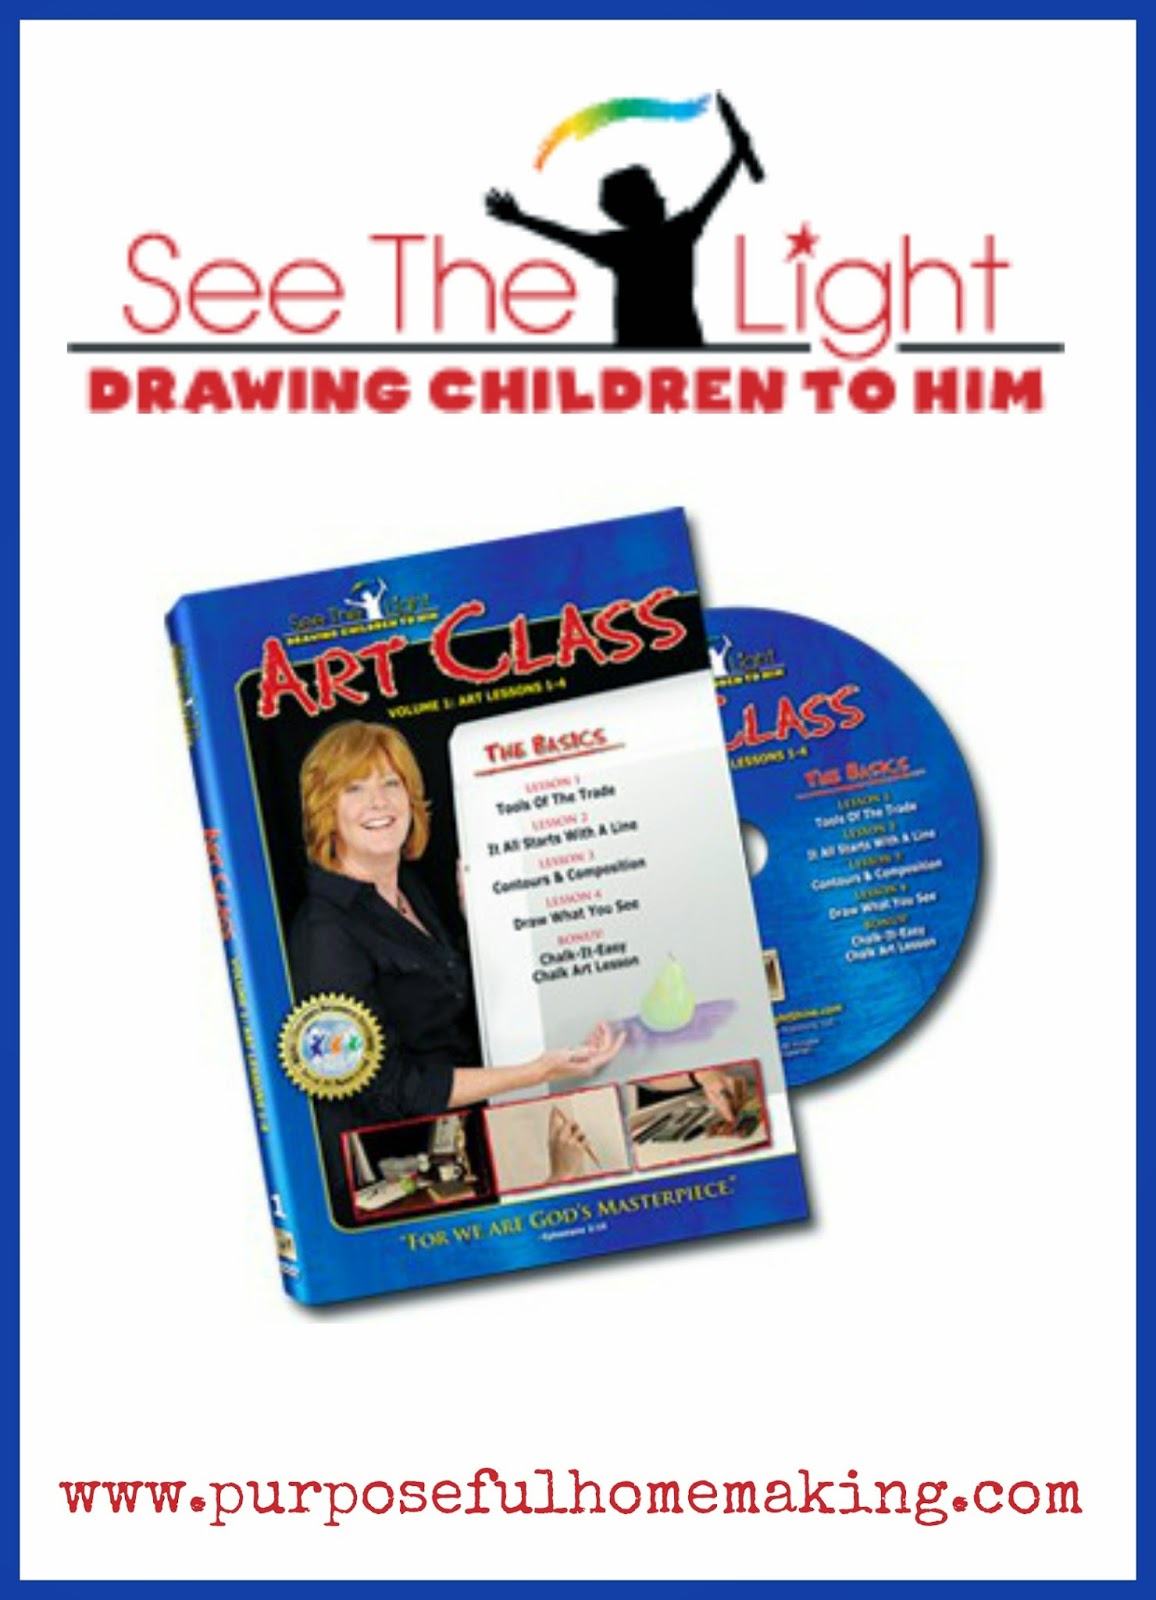 http://www.seethelightshine.com/store/art-class-dvds/art-class-dvd-volume-1-free-shipping.html